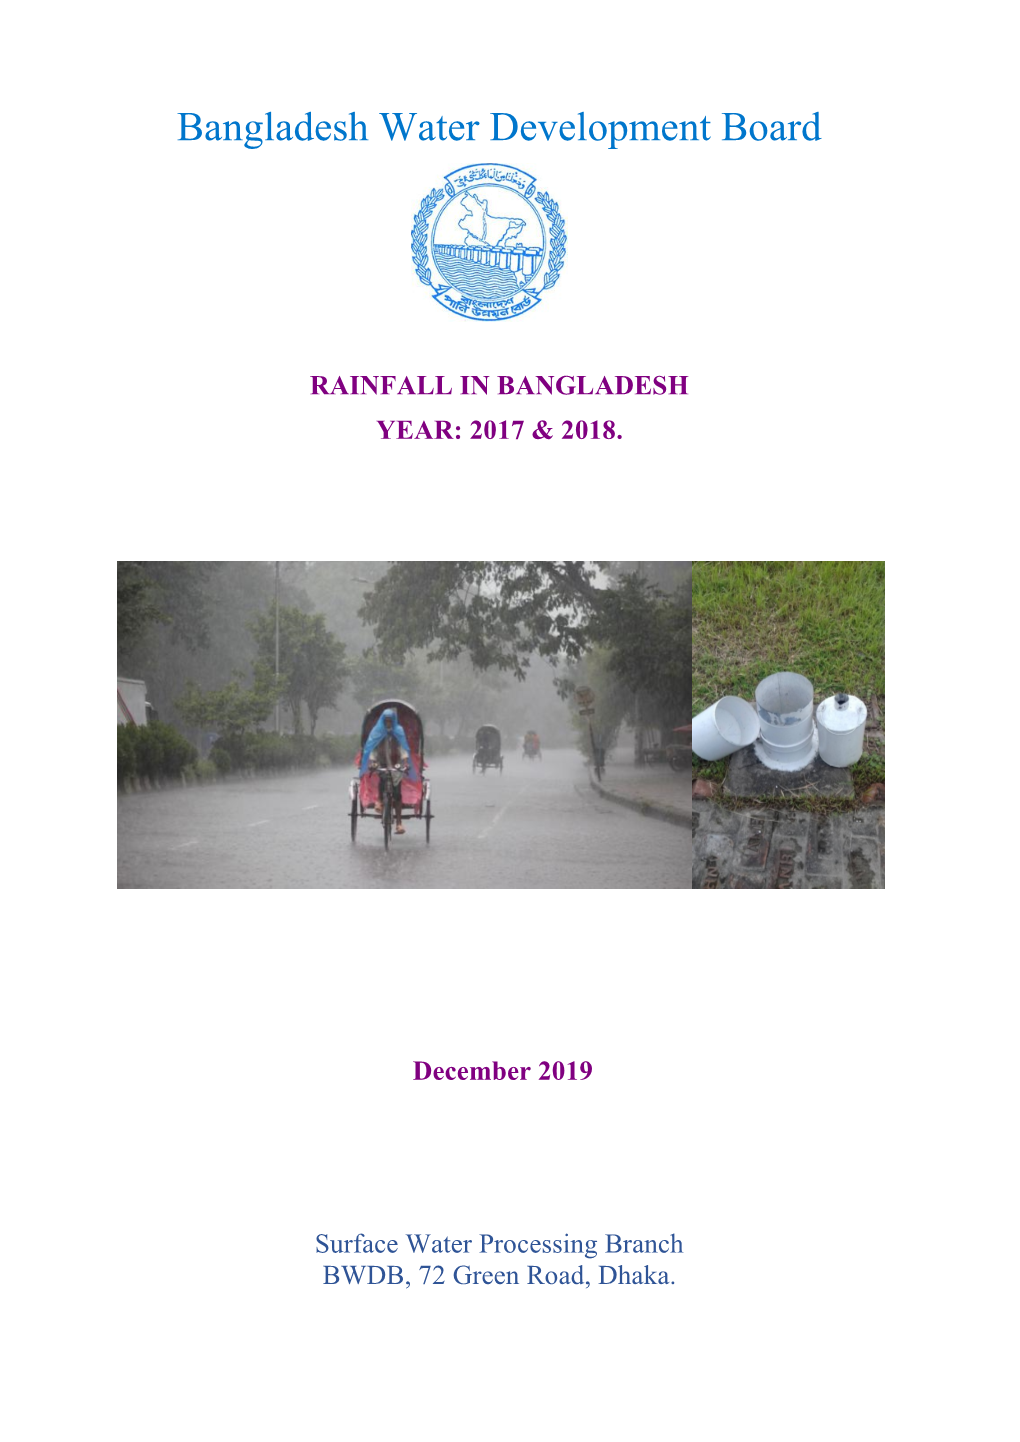 Rainfall in Bangladesh Year: 2017 & 2018